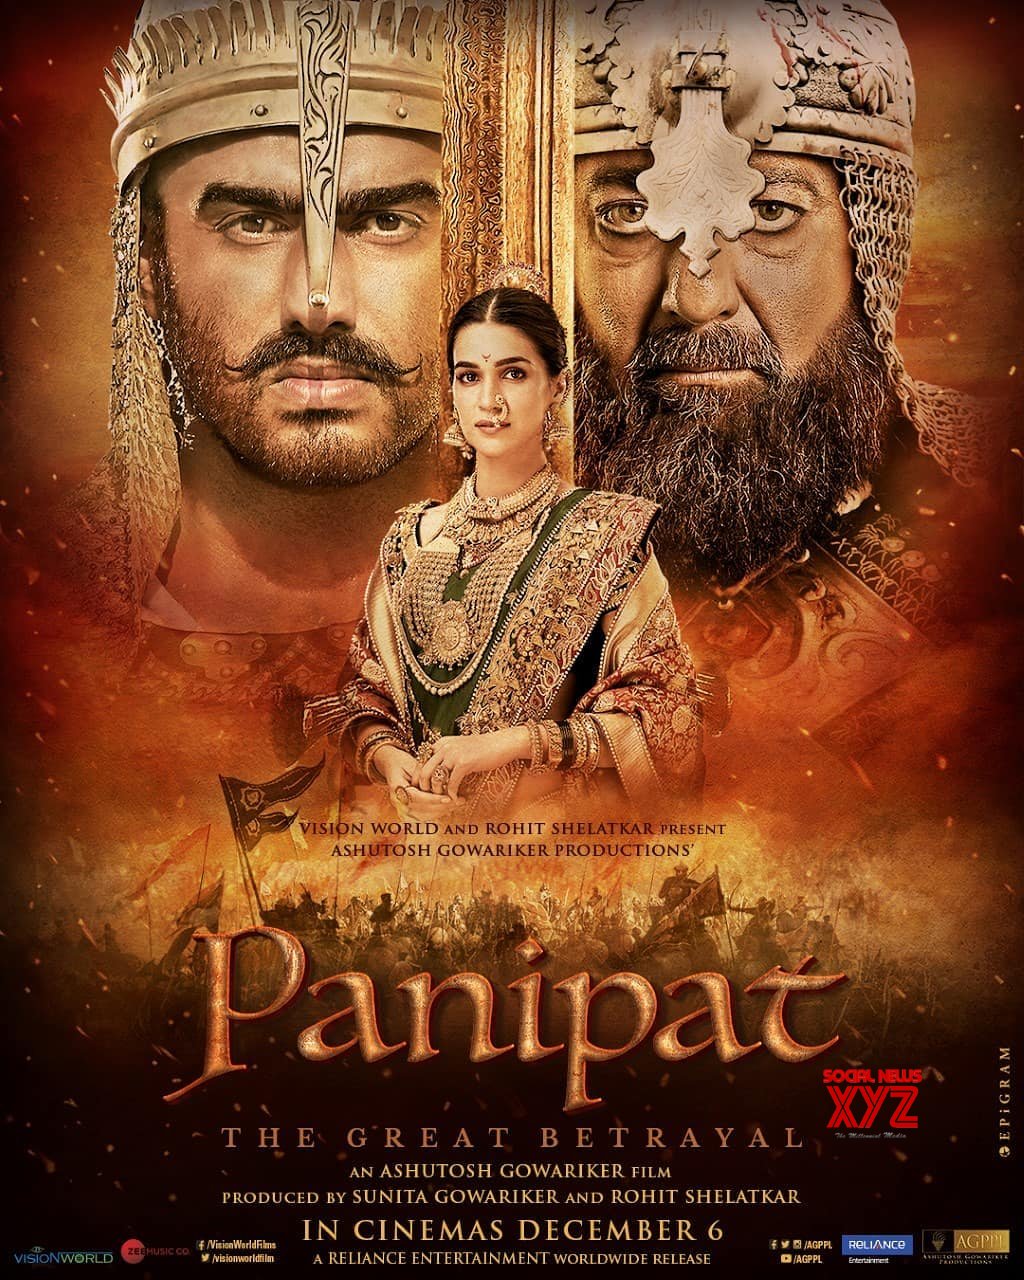 Panipat Movie : Trailer, Release Date, Cast, And Description